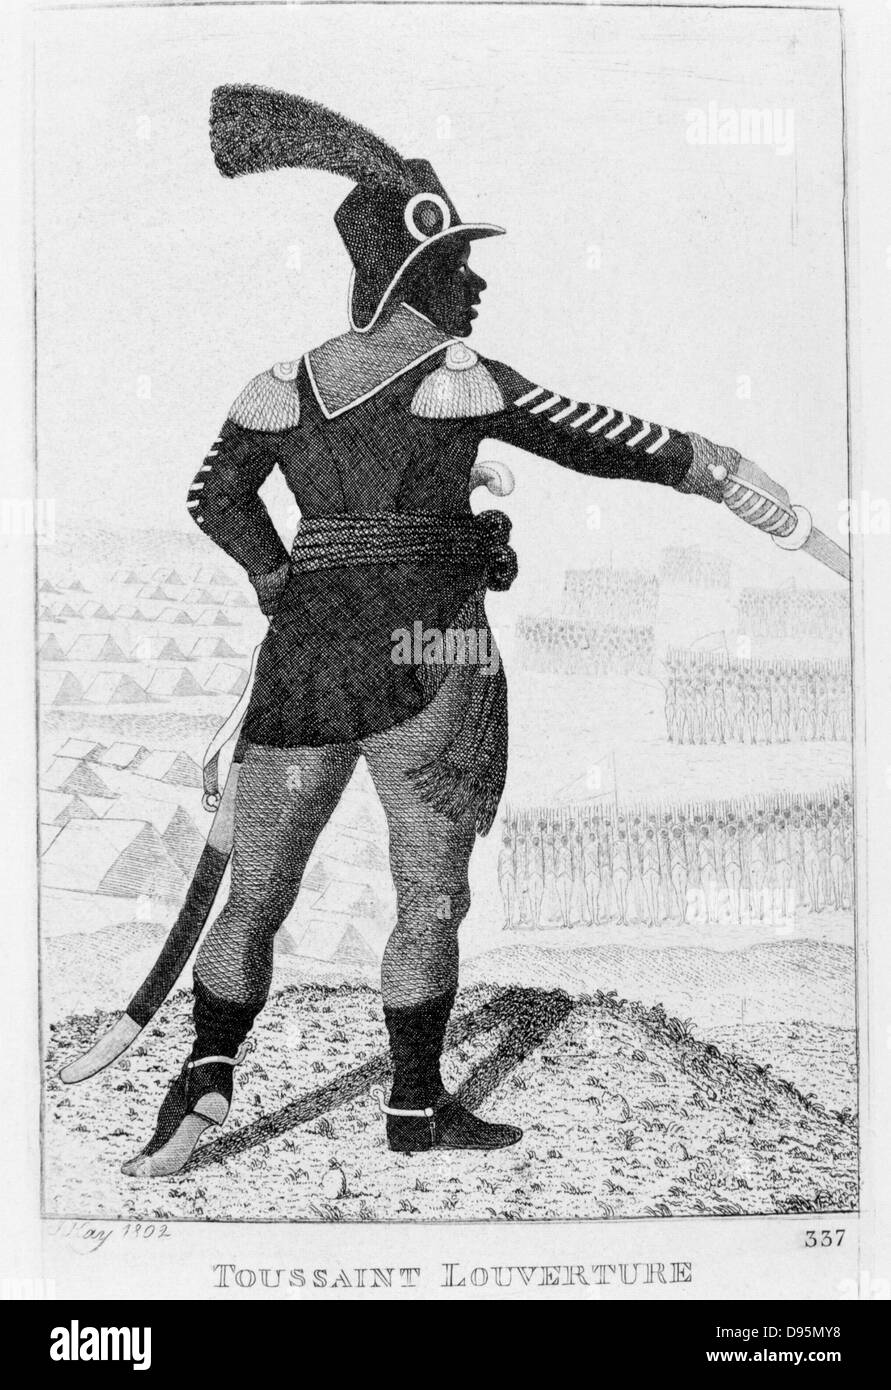 Pierre Dominique Toussaint l'Ouverture (1746-1803) Haitian revolutionary leader. Etching by John Kay 1802. Stock Photo